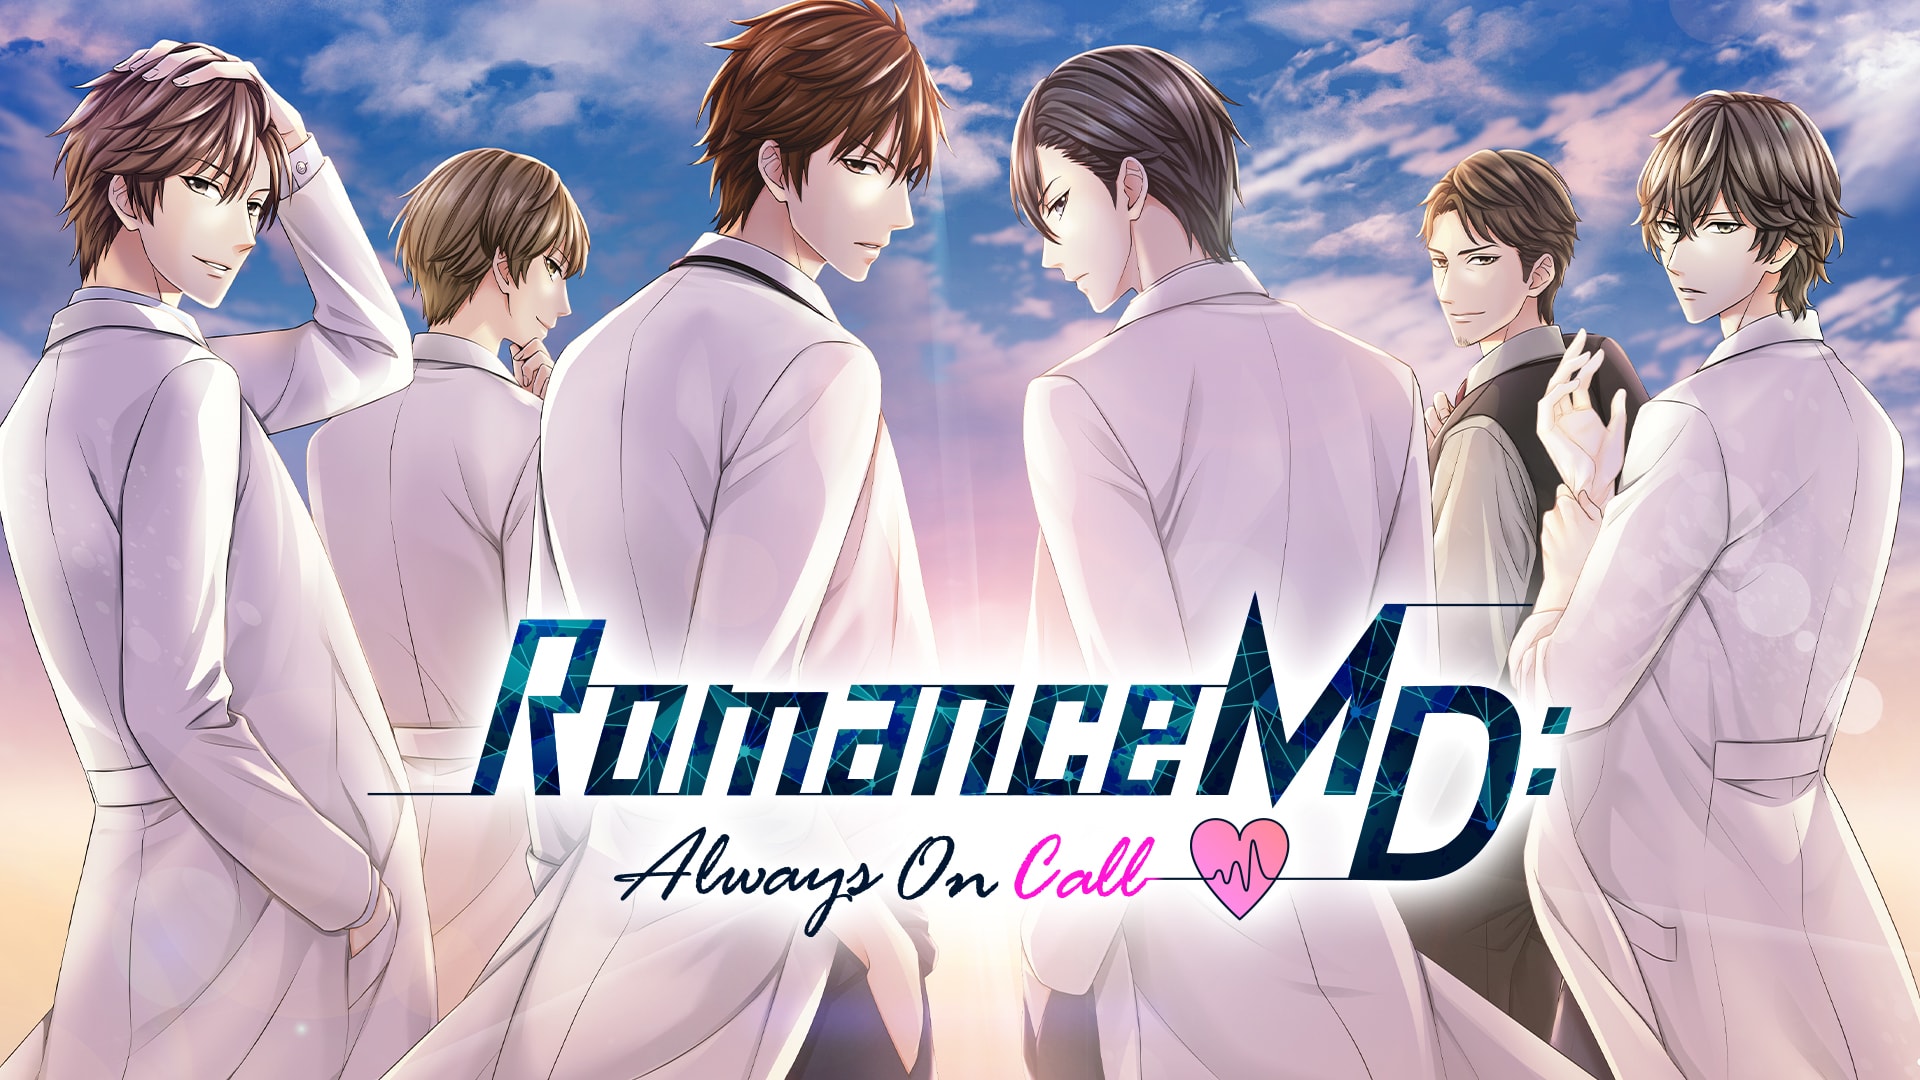 Romance MD: Always On Call